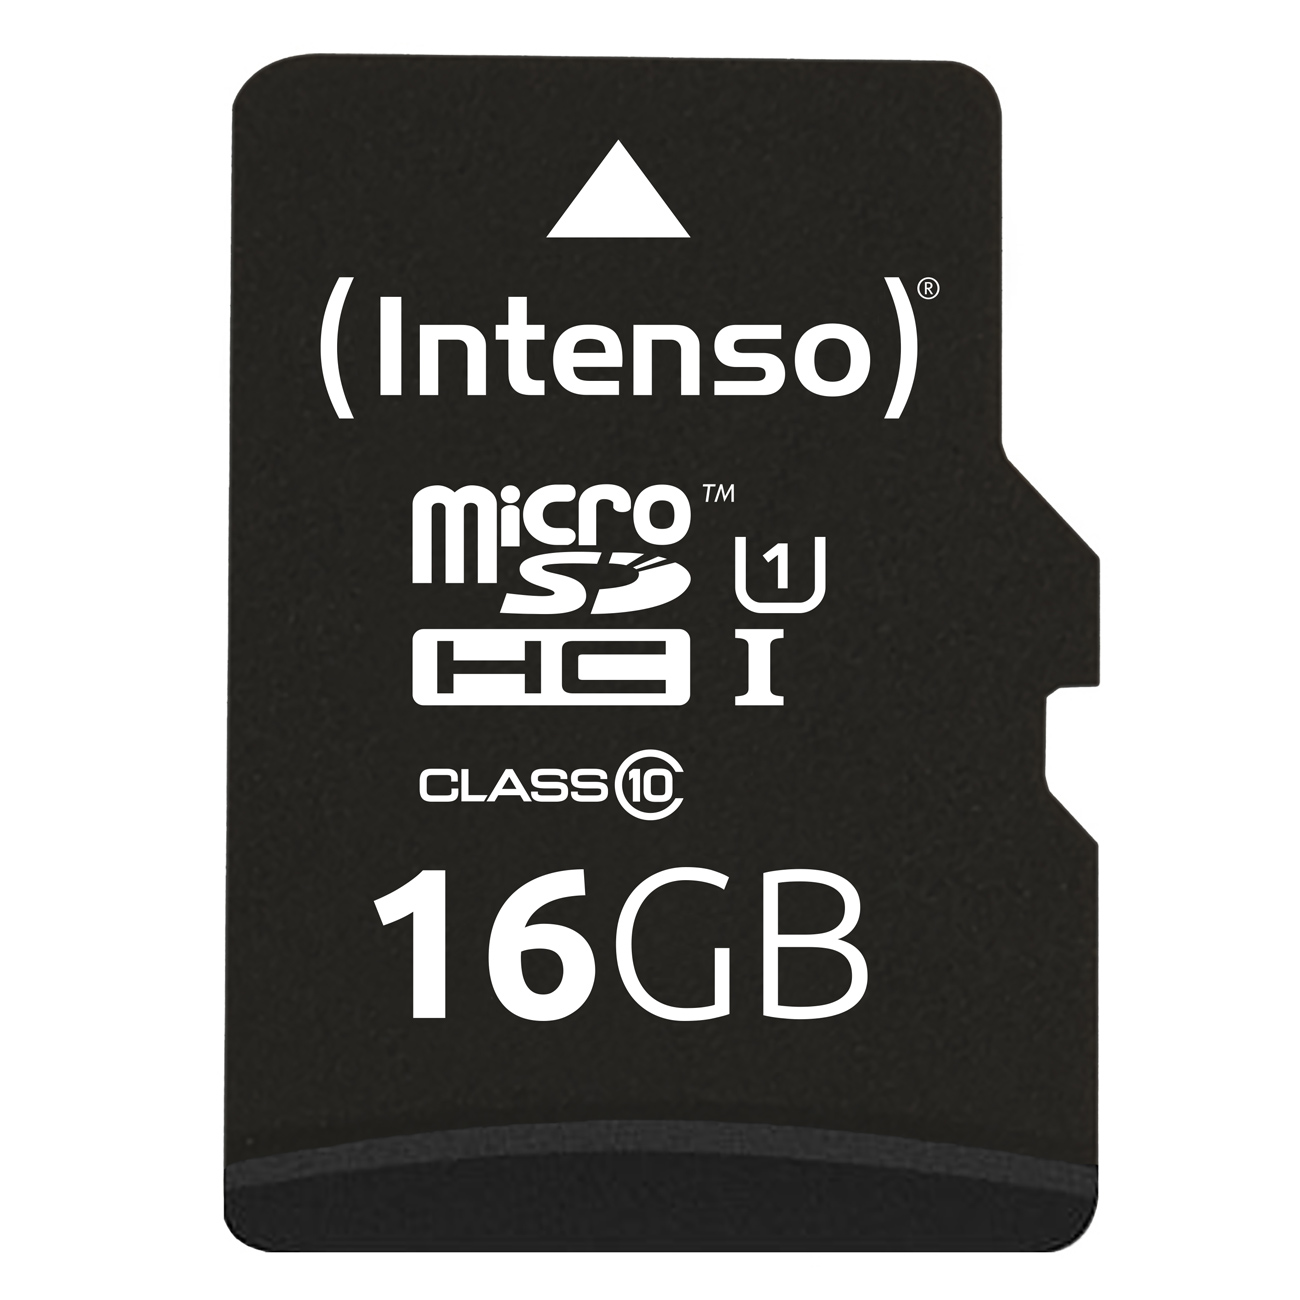 Intenso 3423470, Micro SD Karten, SD MicroSD Card 16GB 3423470 (BILD1)